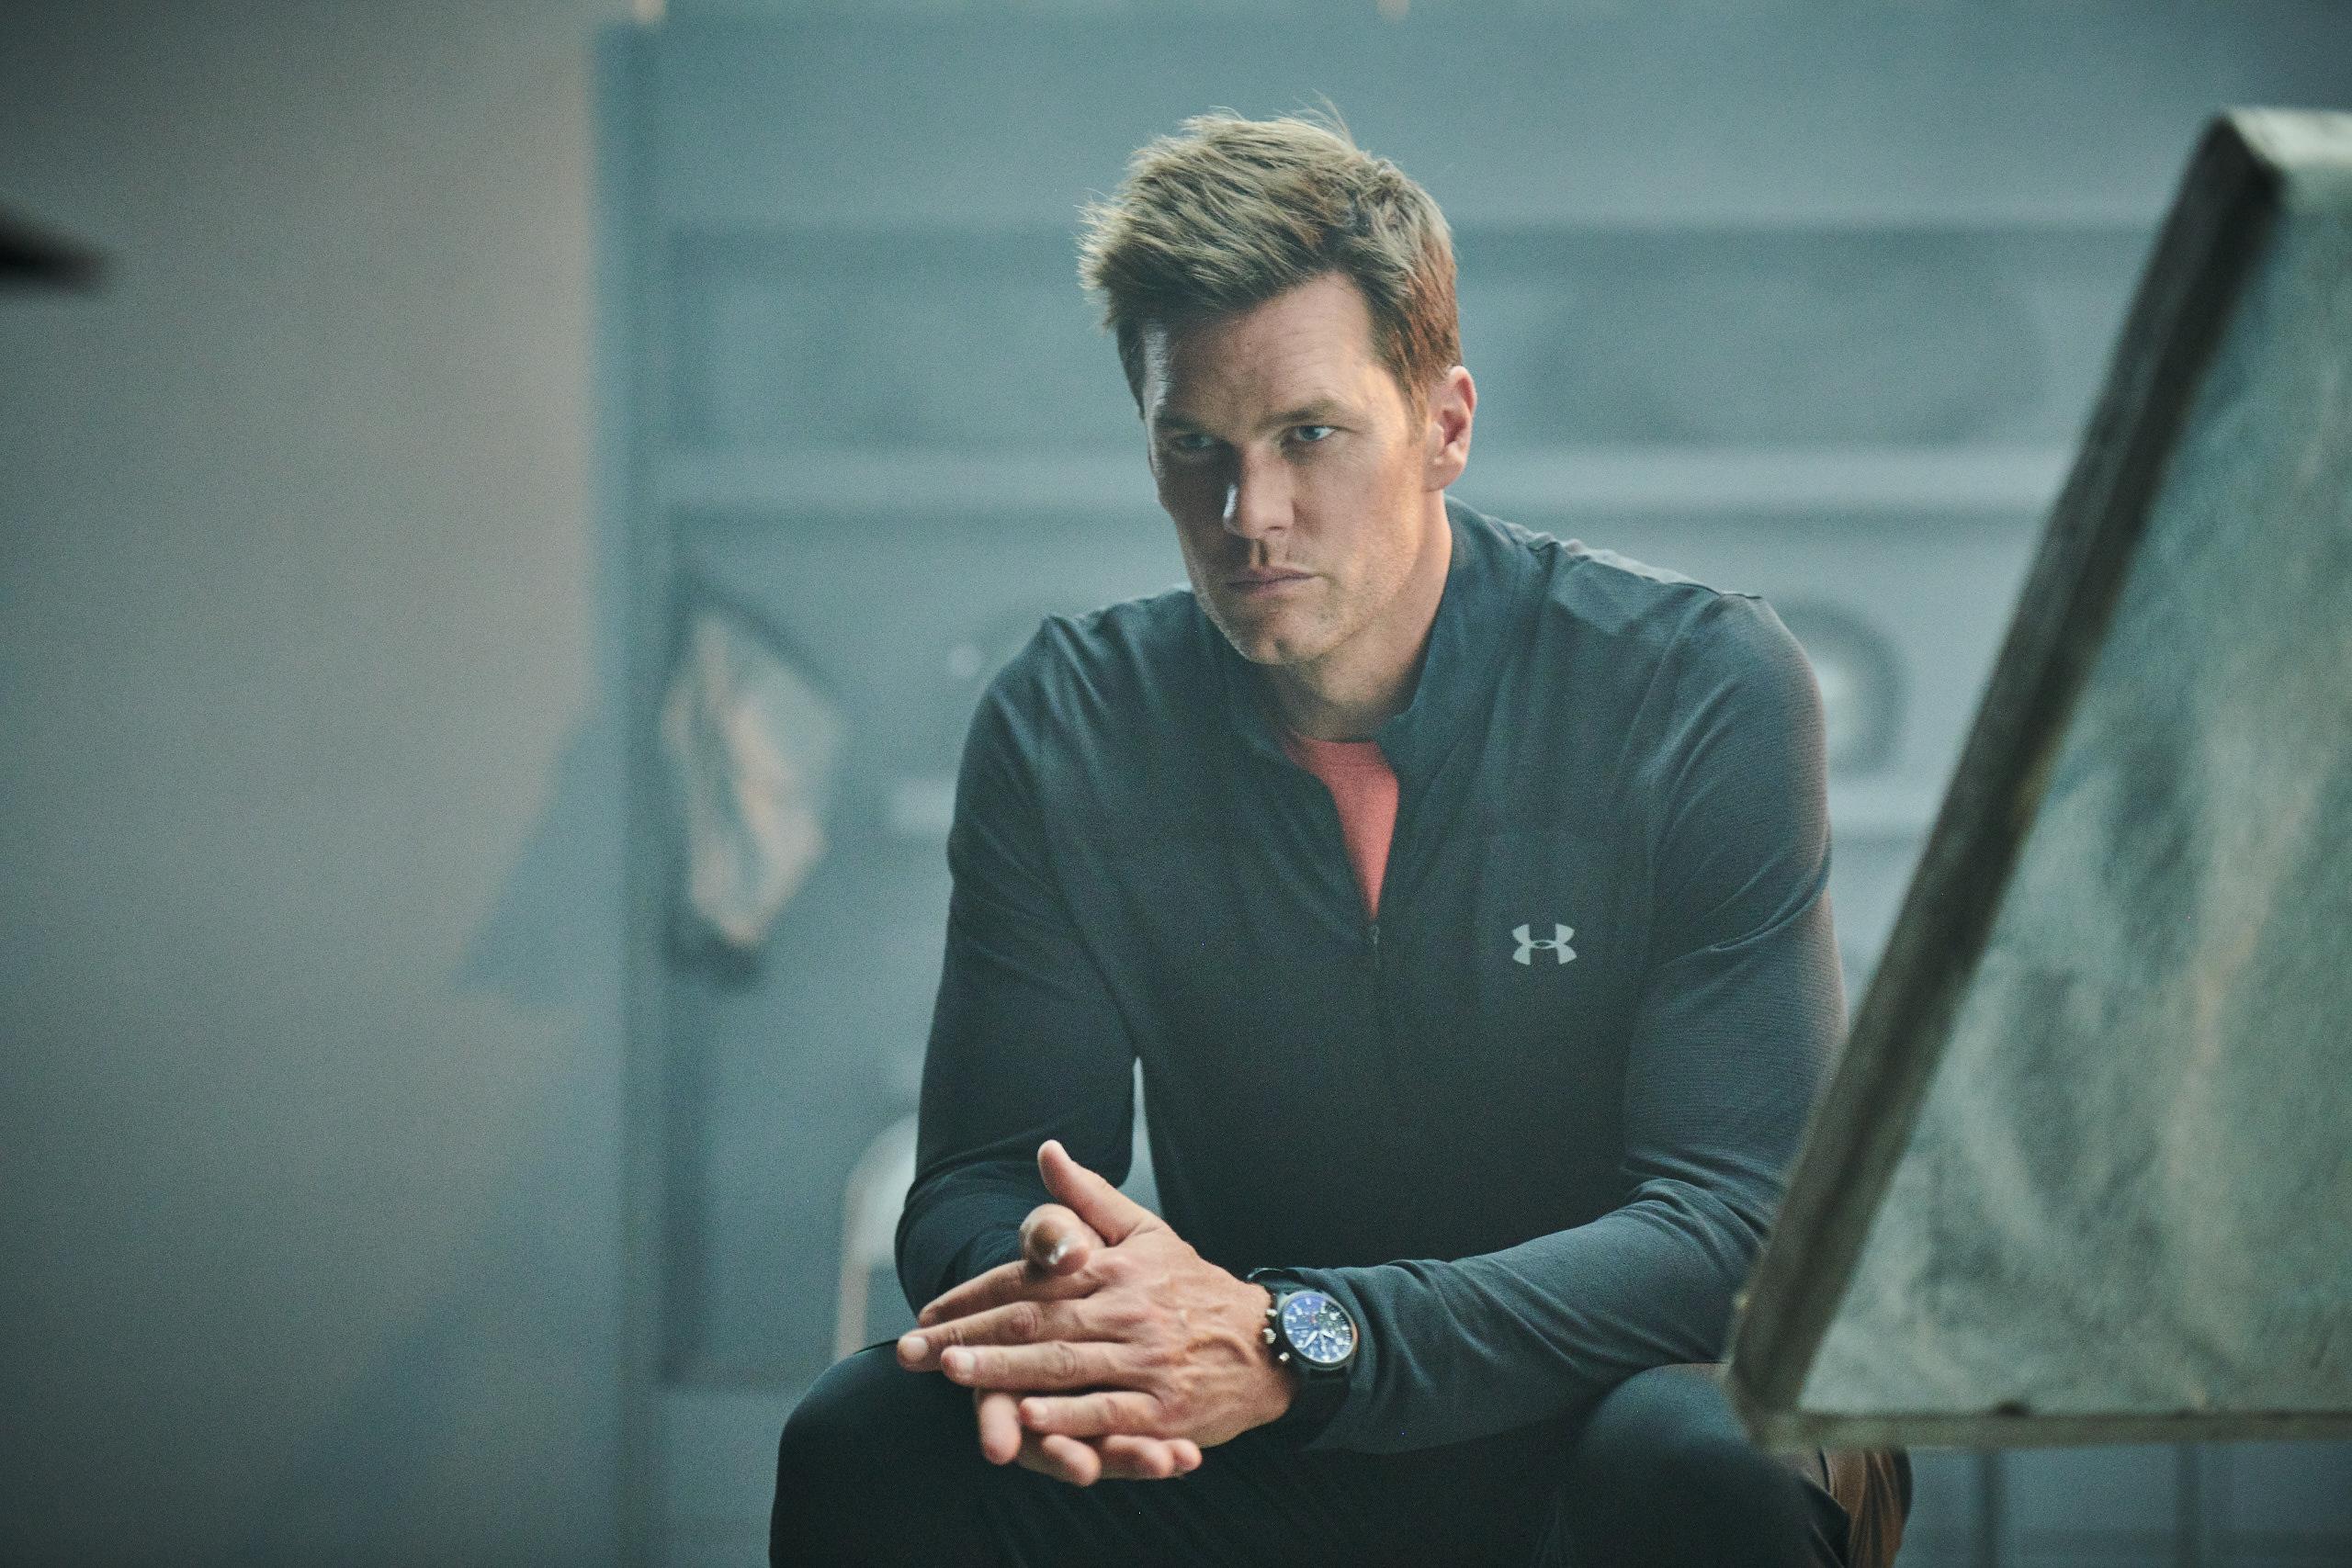 Legendary quarterback Tom Brady stars in IWC Schaffhausen s global Top Gun campaign